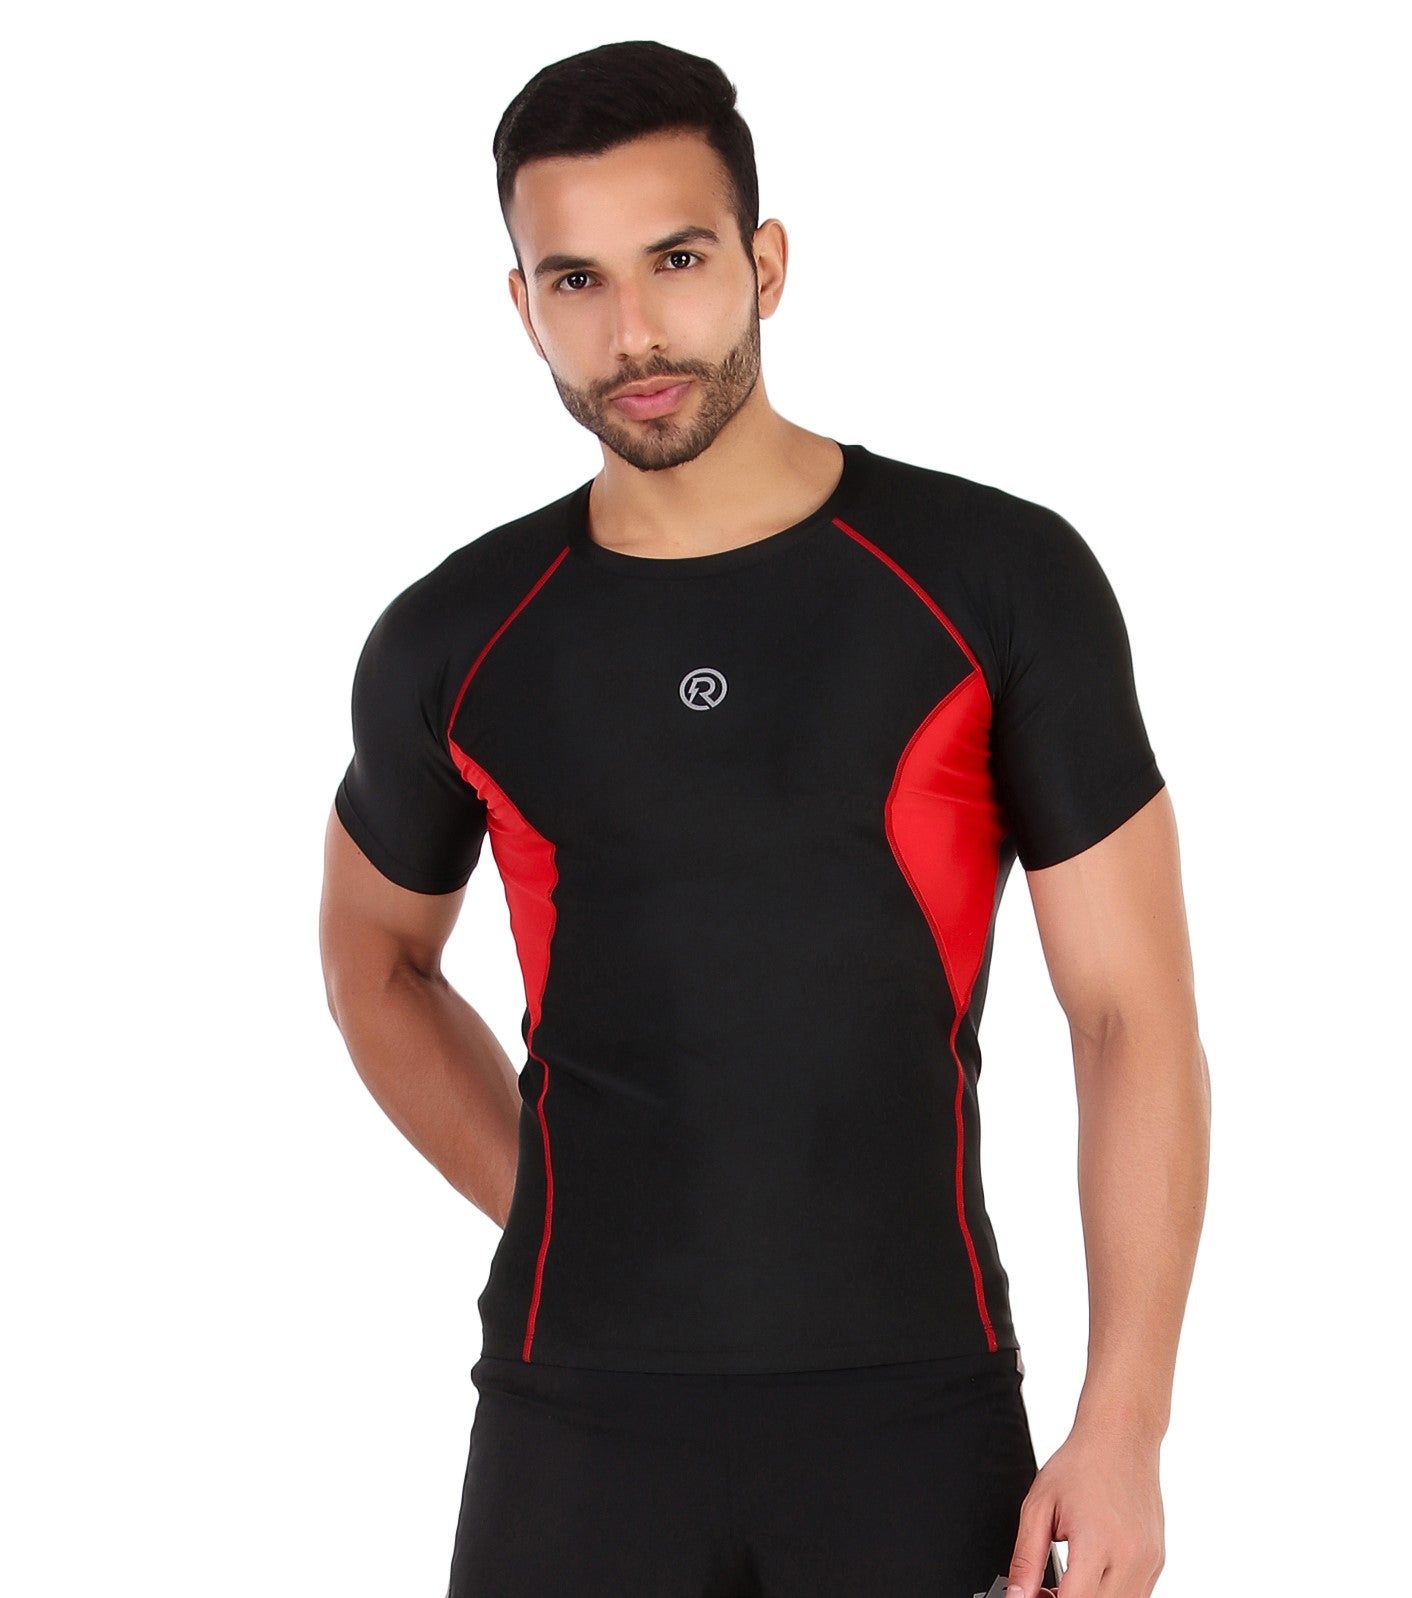 Men's Polyester Compression Tshirt Half Sleeve (Black/Red)